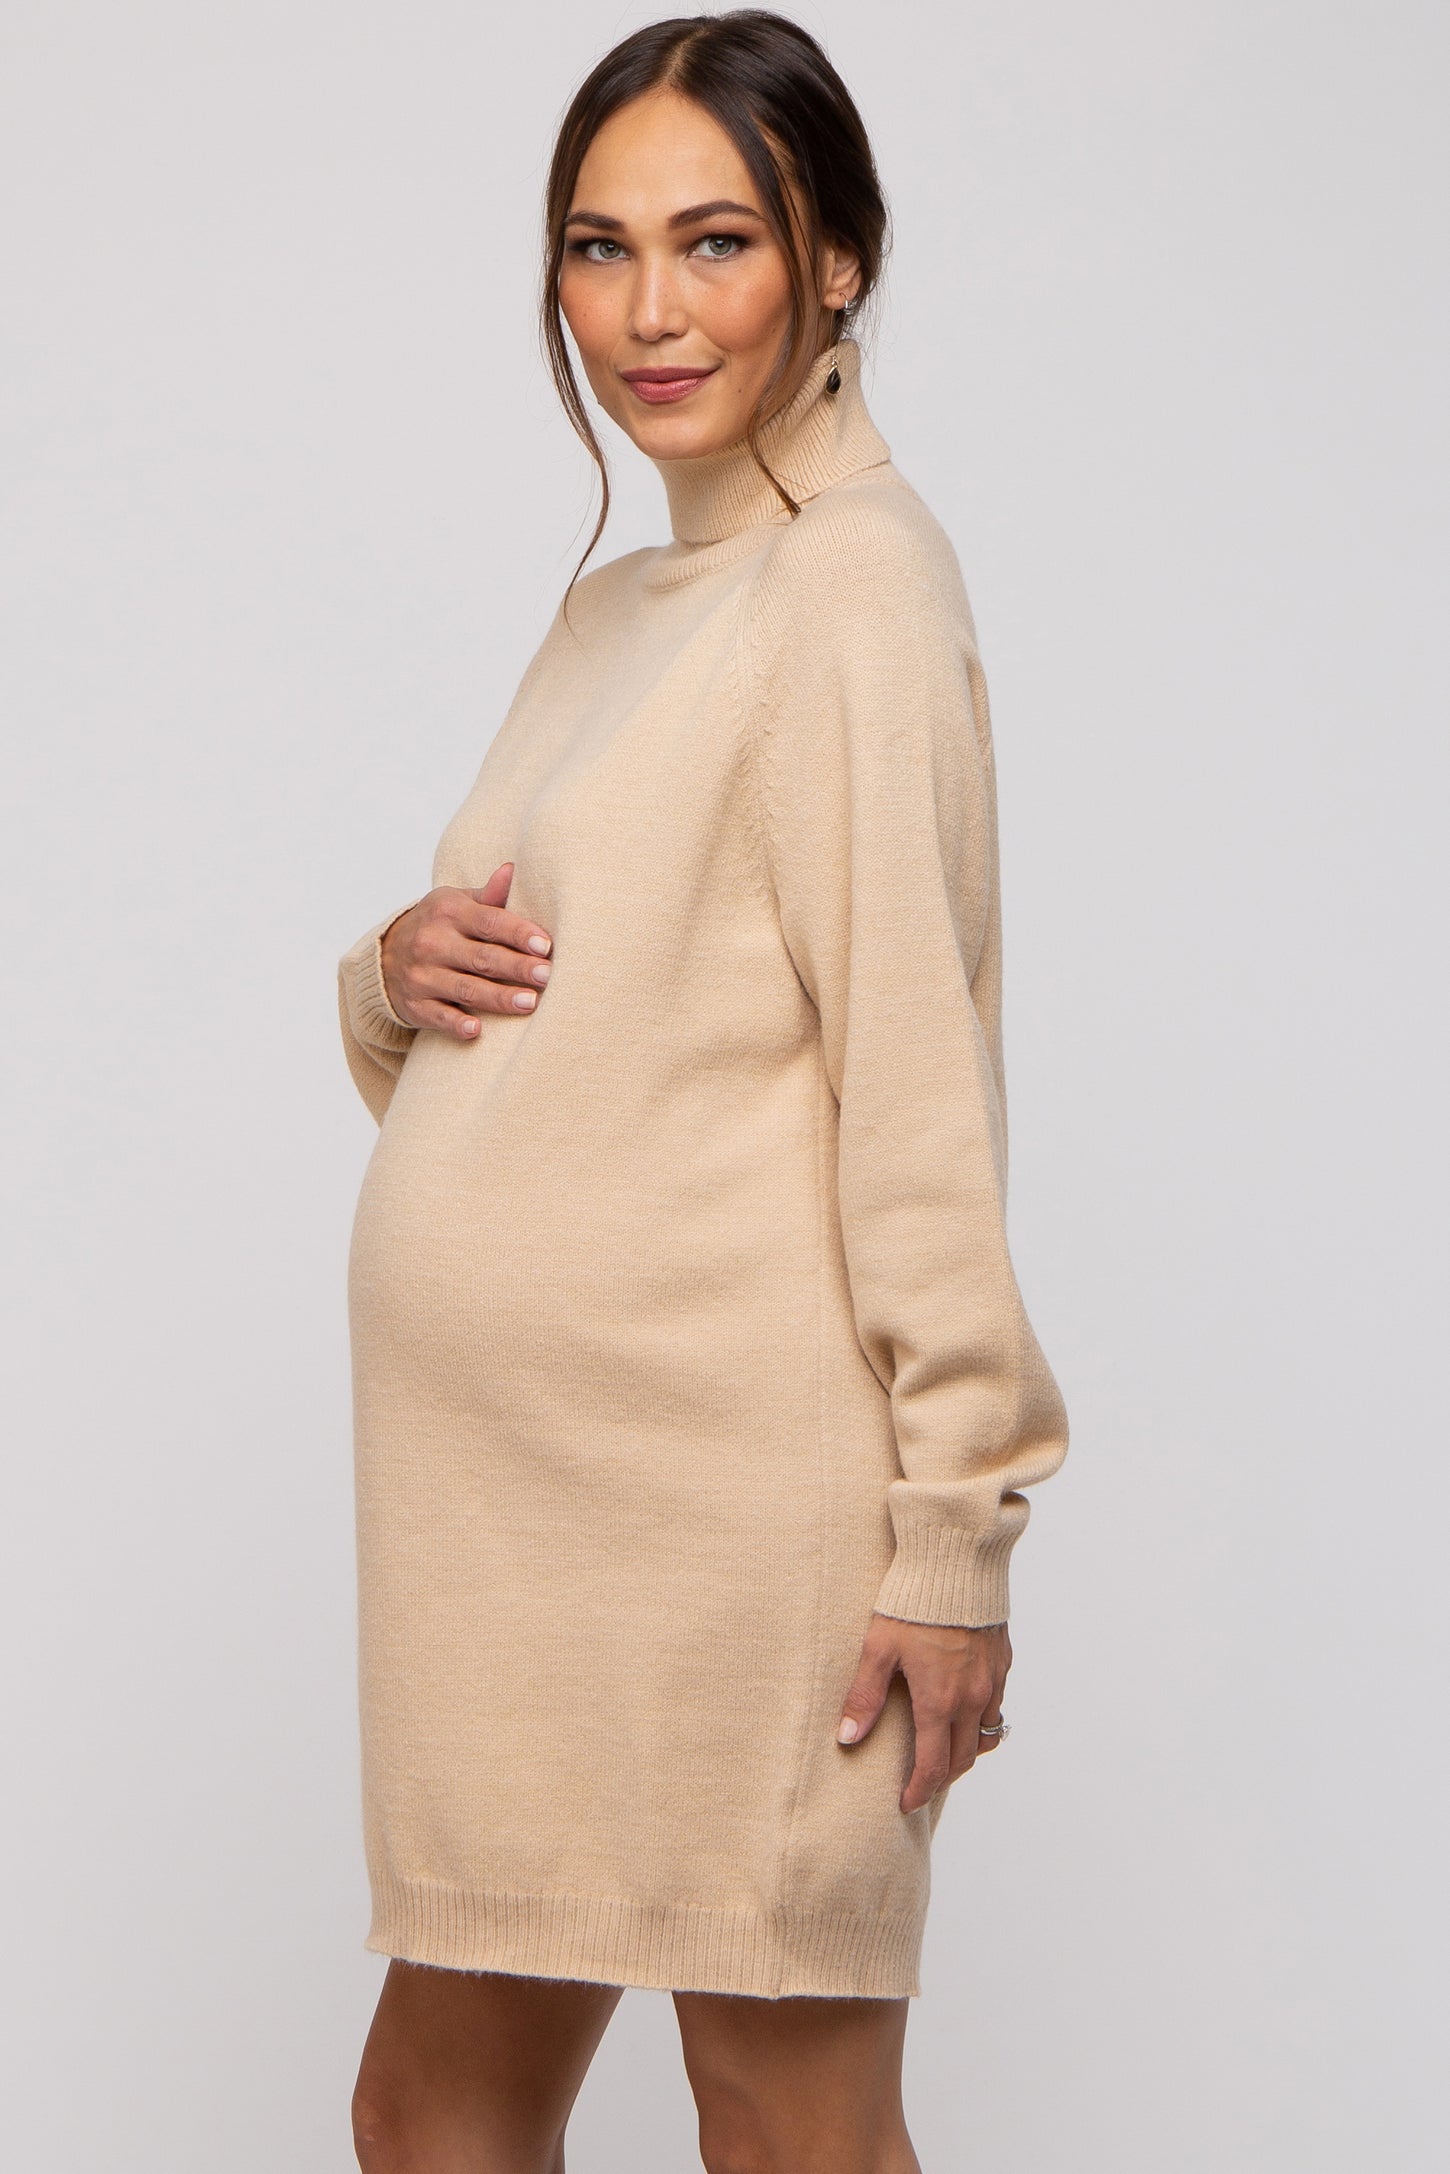 Beige Knit Long Sleeve Turtleneck Maternity Sweater Dress– PinkBlush